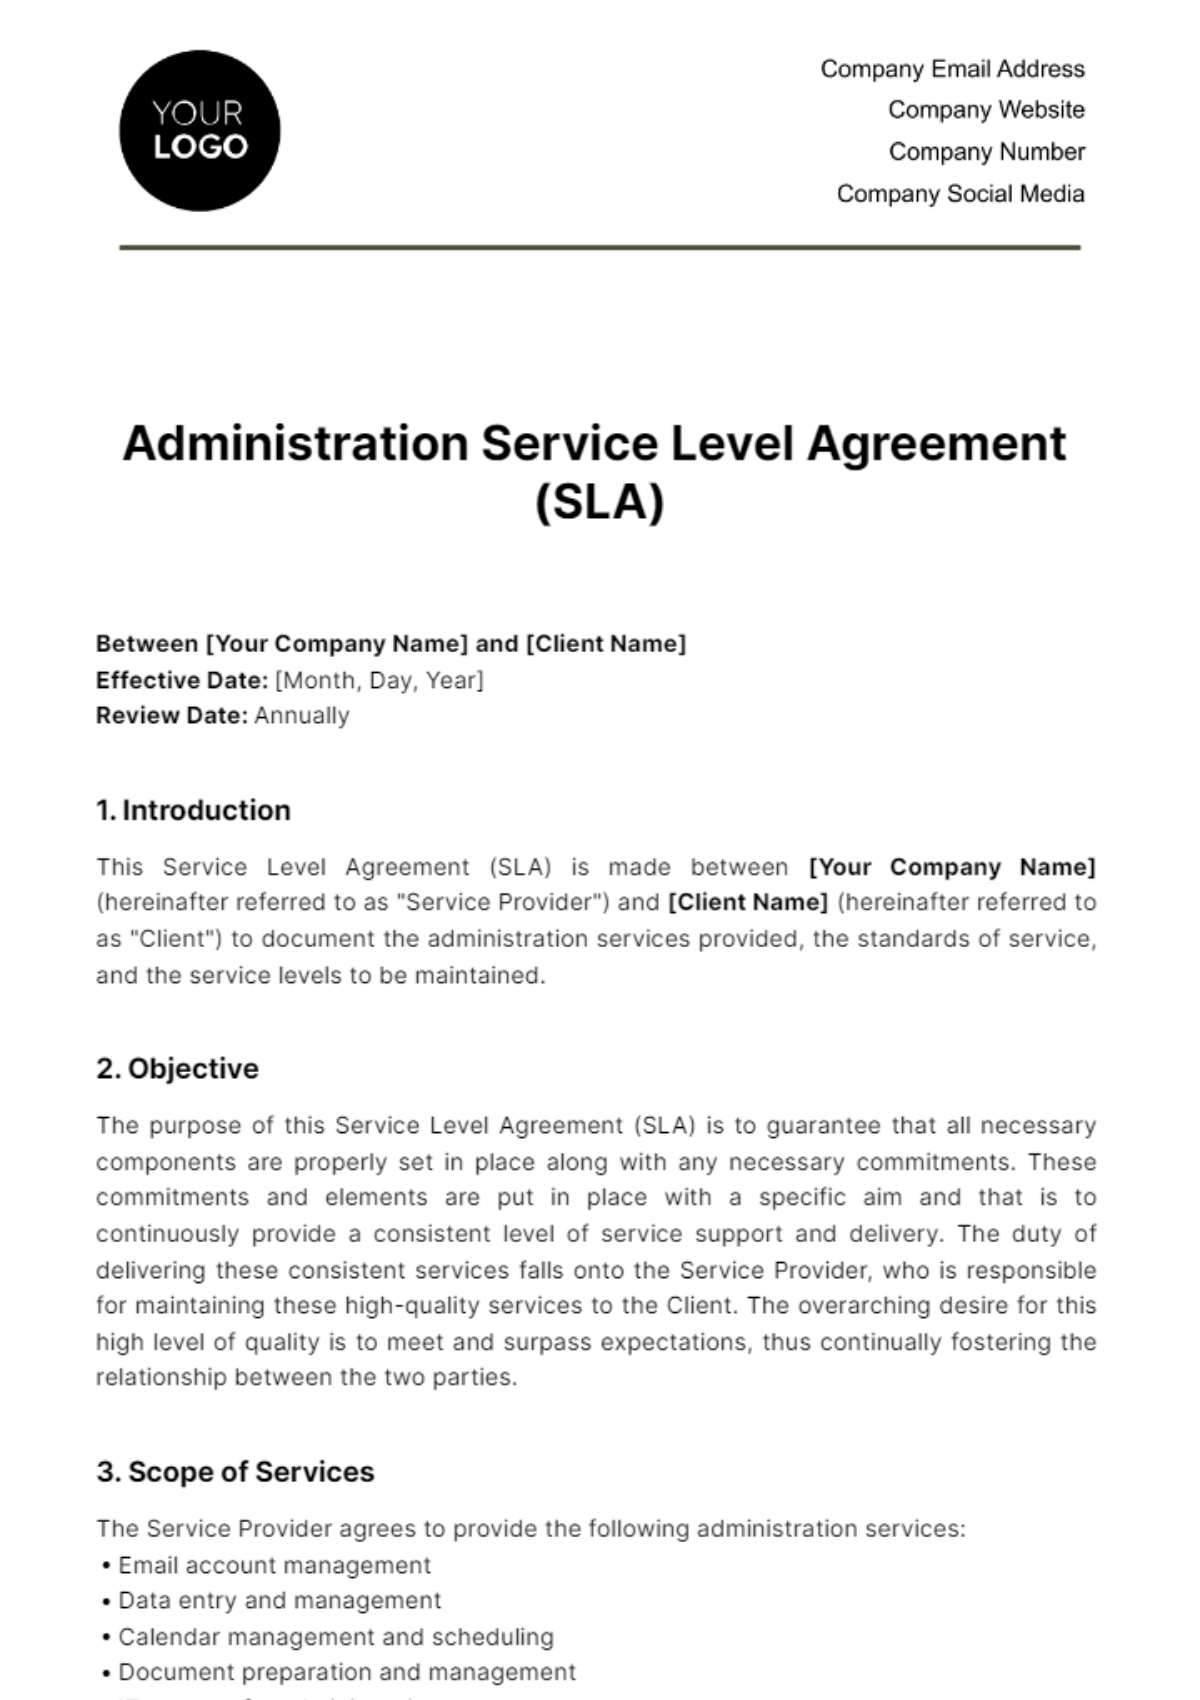 Administration Service Level Agreement (SLA) Template